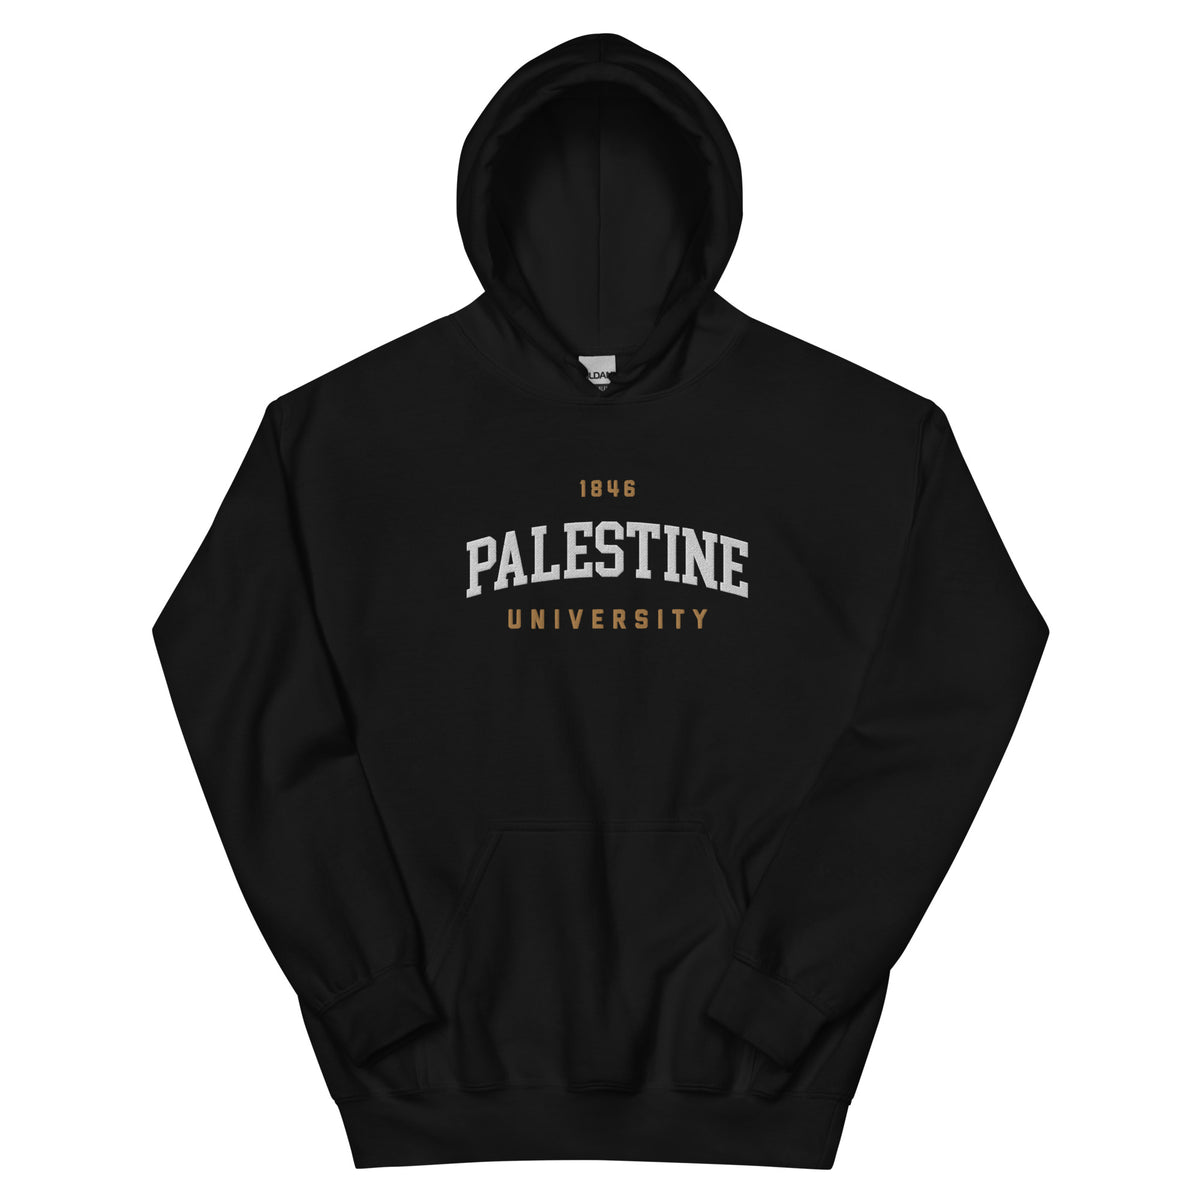 Palestine University 1846 hoodie in black by Dar Collective